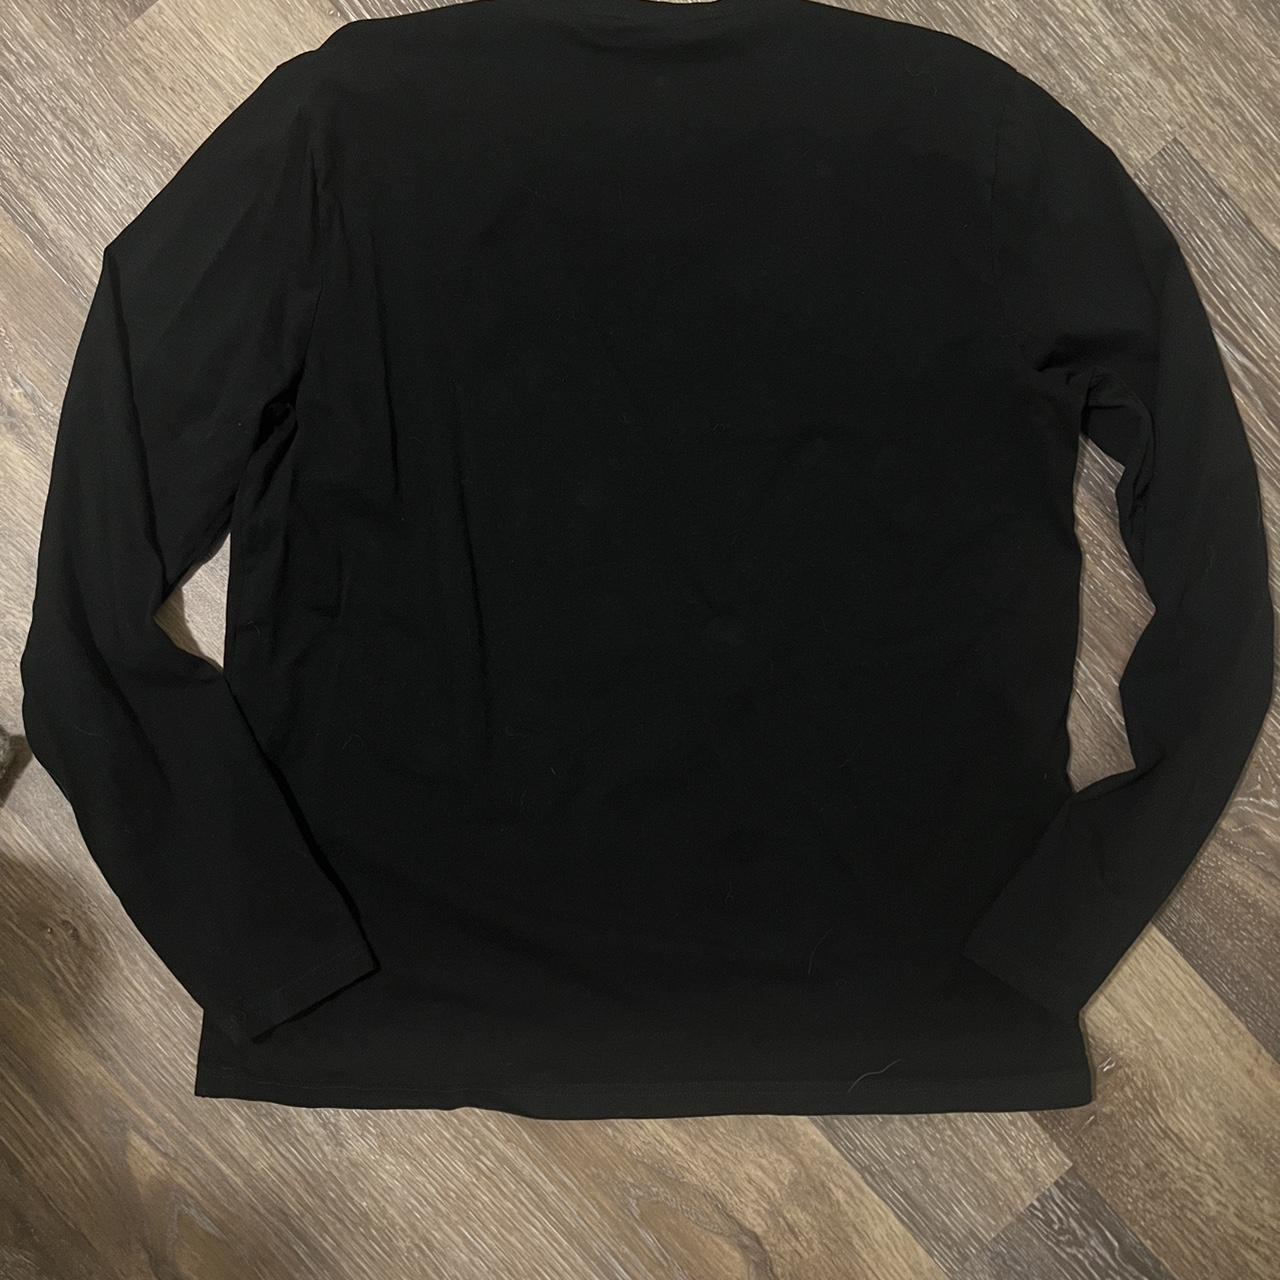 Gymshark Crest T-Shirt - Black